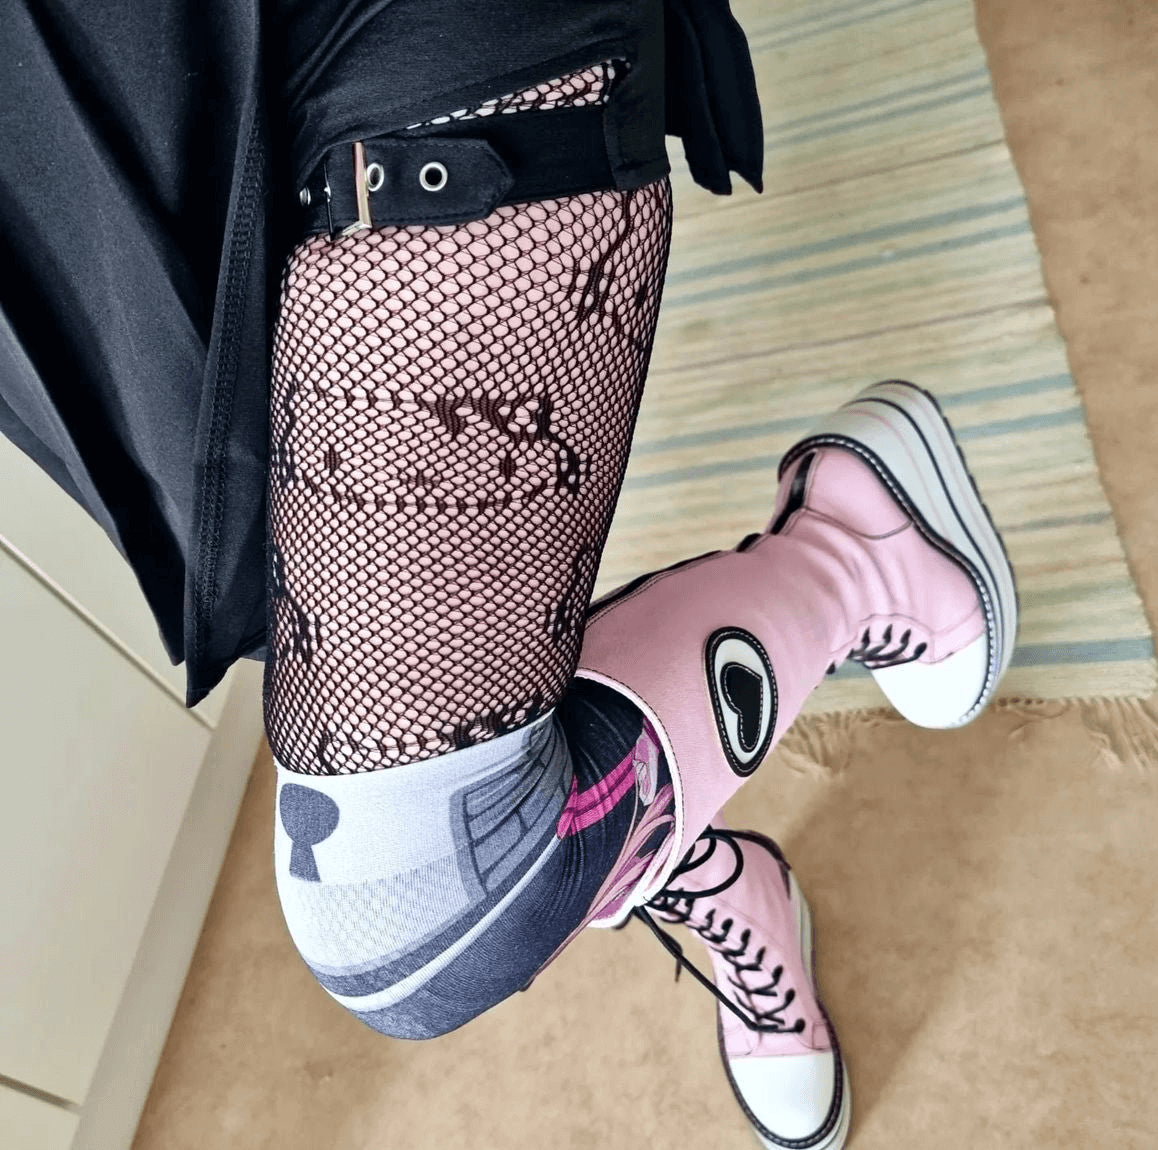 YRU Detention Heart Pink Platform Boots with Striped Heel